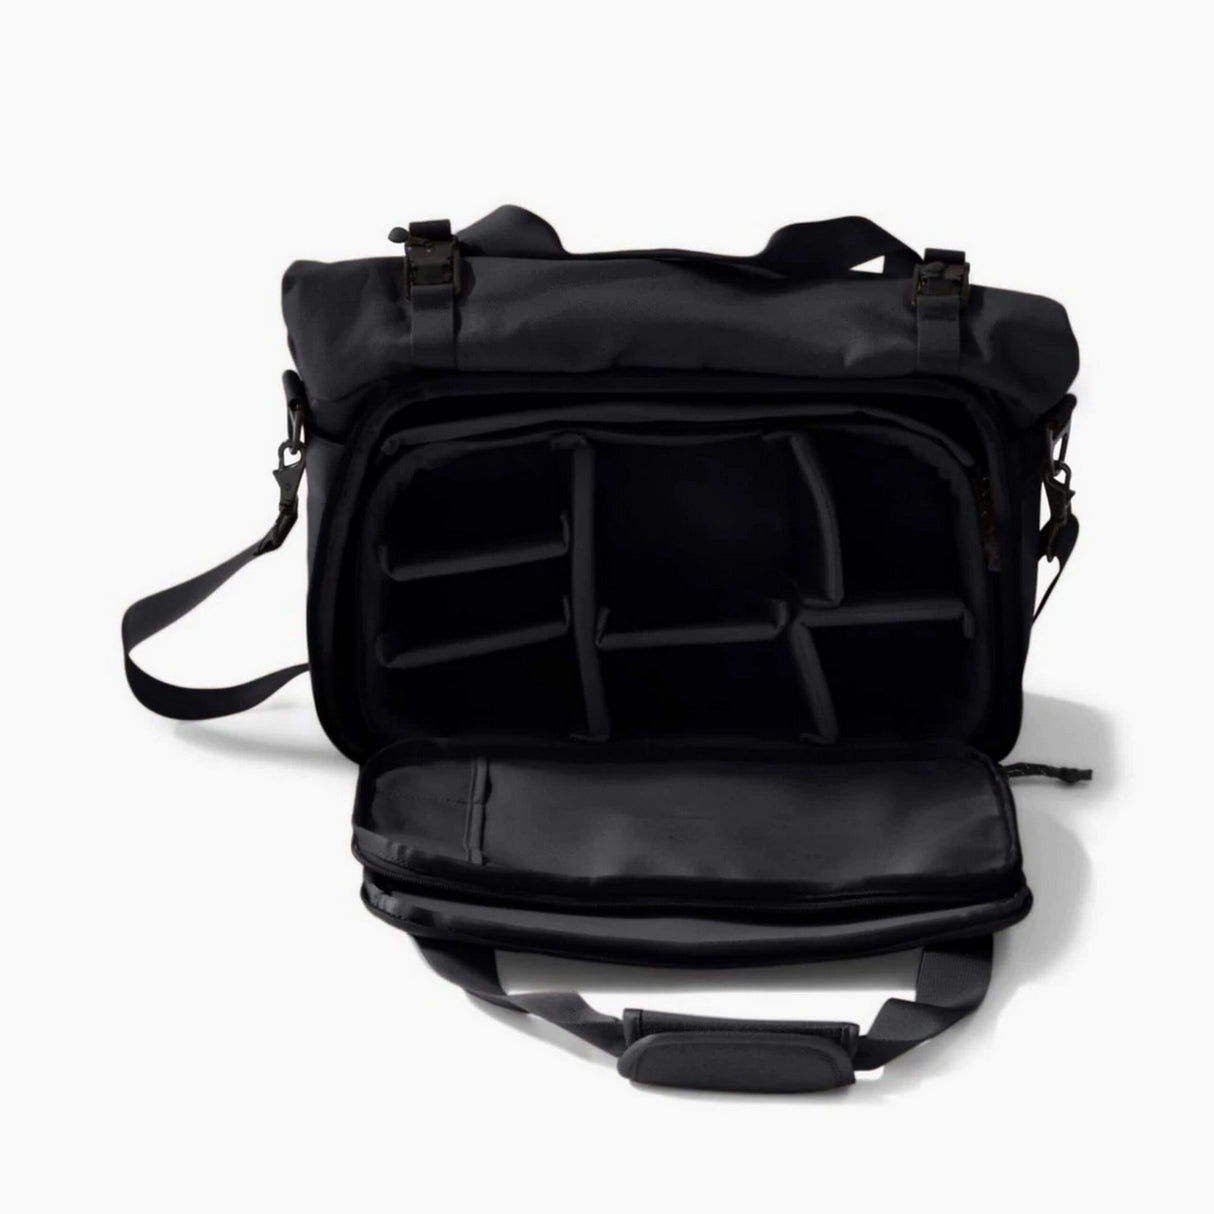 Langly Weekender Flight Bag With Camera Cube, Black